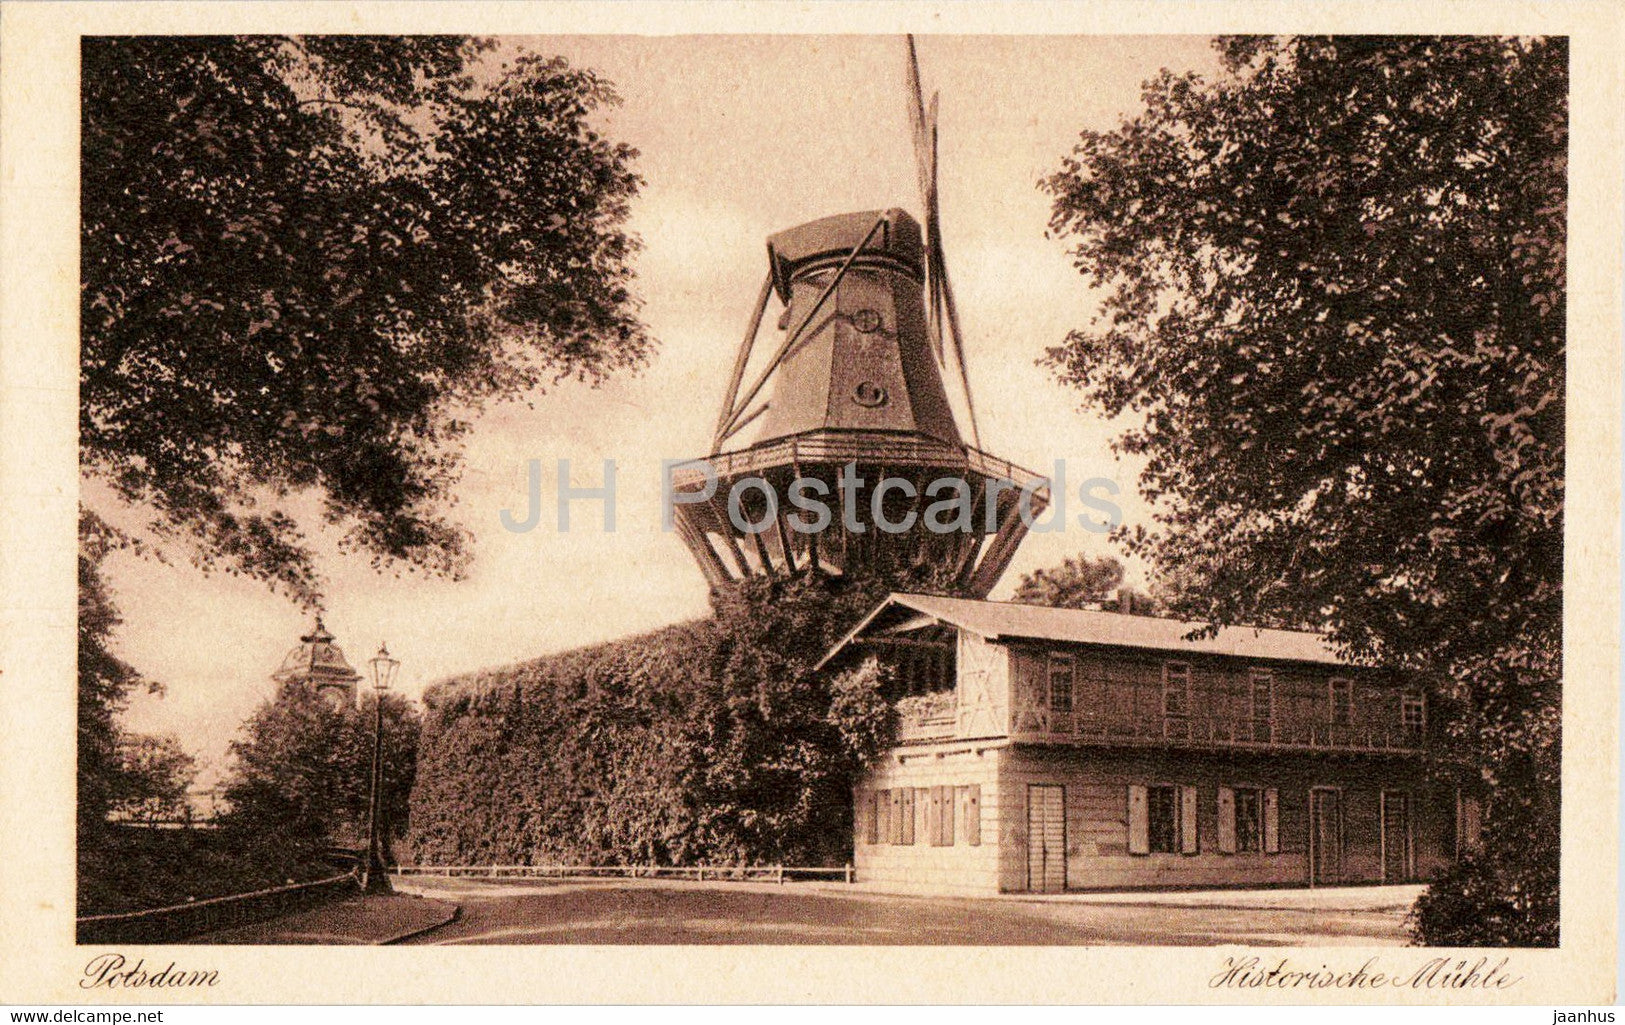 Potsdam - Historische Muhle - windmill - 1530 - old postcard - Germany - unused - JH Postcards